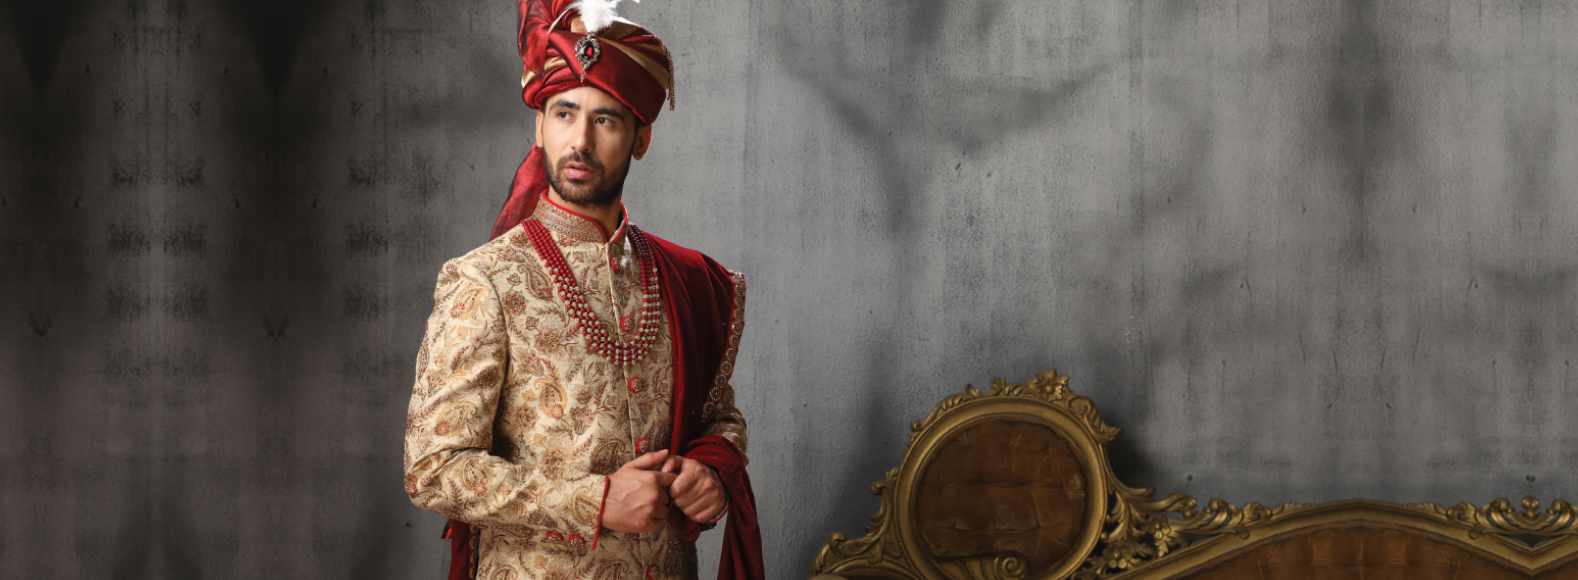 Latest Style Wedding Sherwani For Men and Makeup Ideas